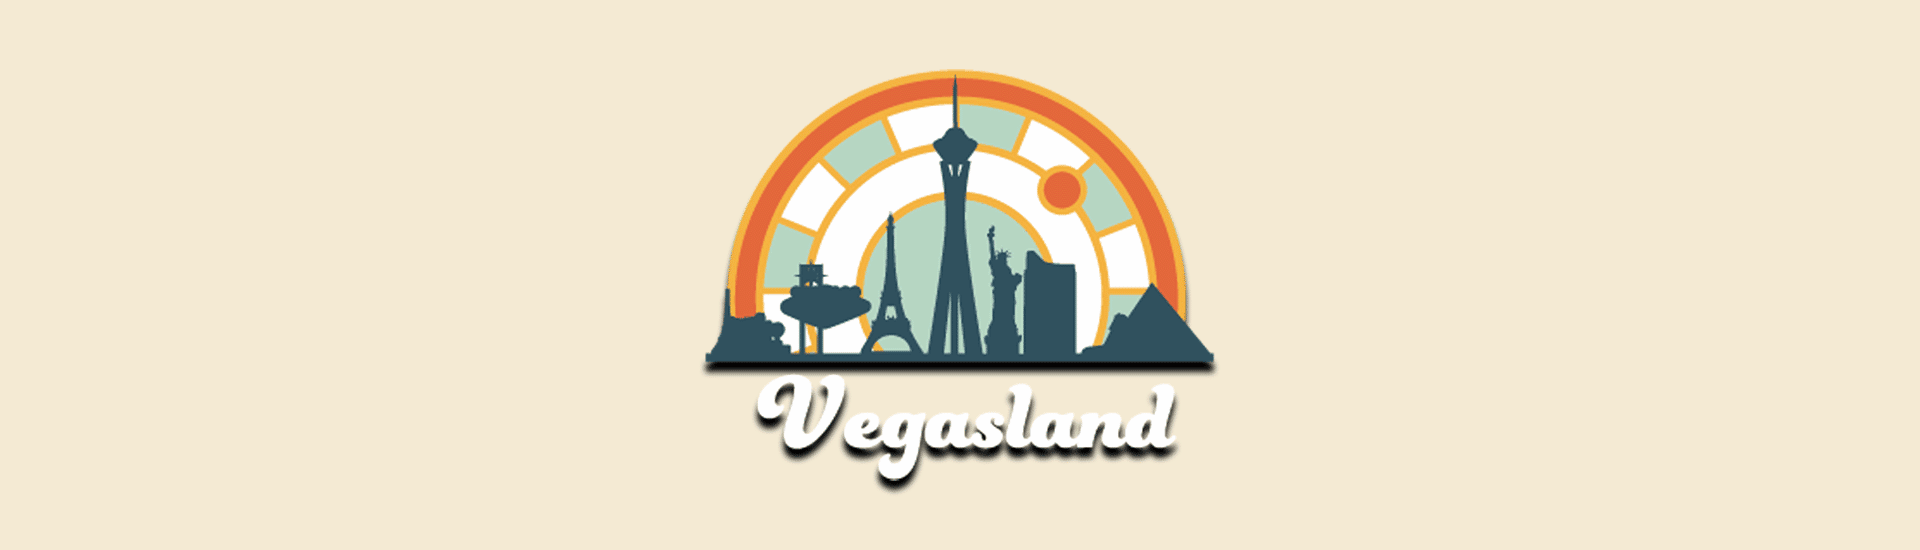 VegasLand Featured Image